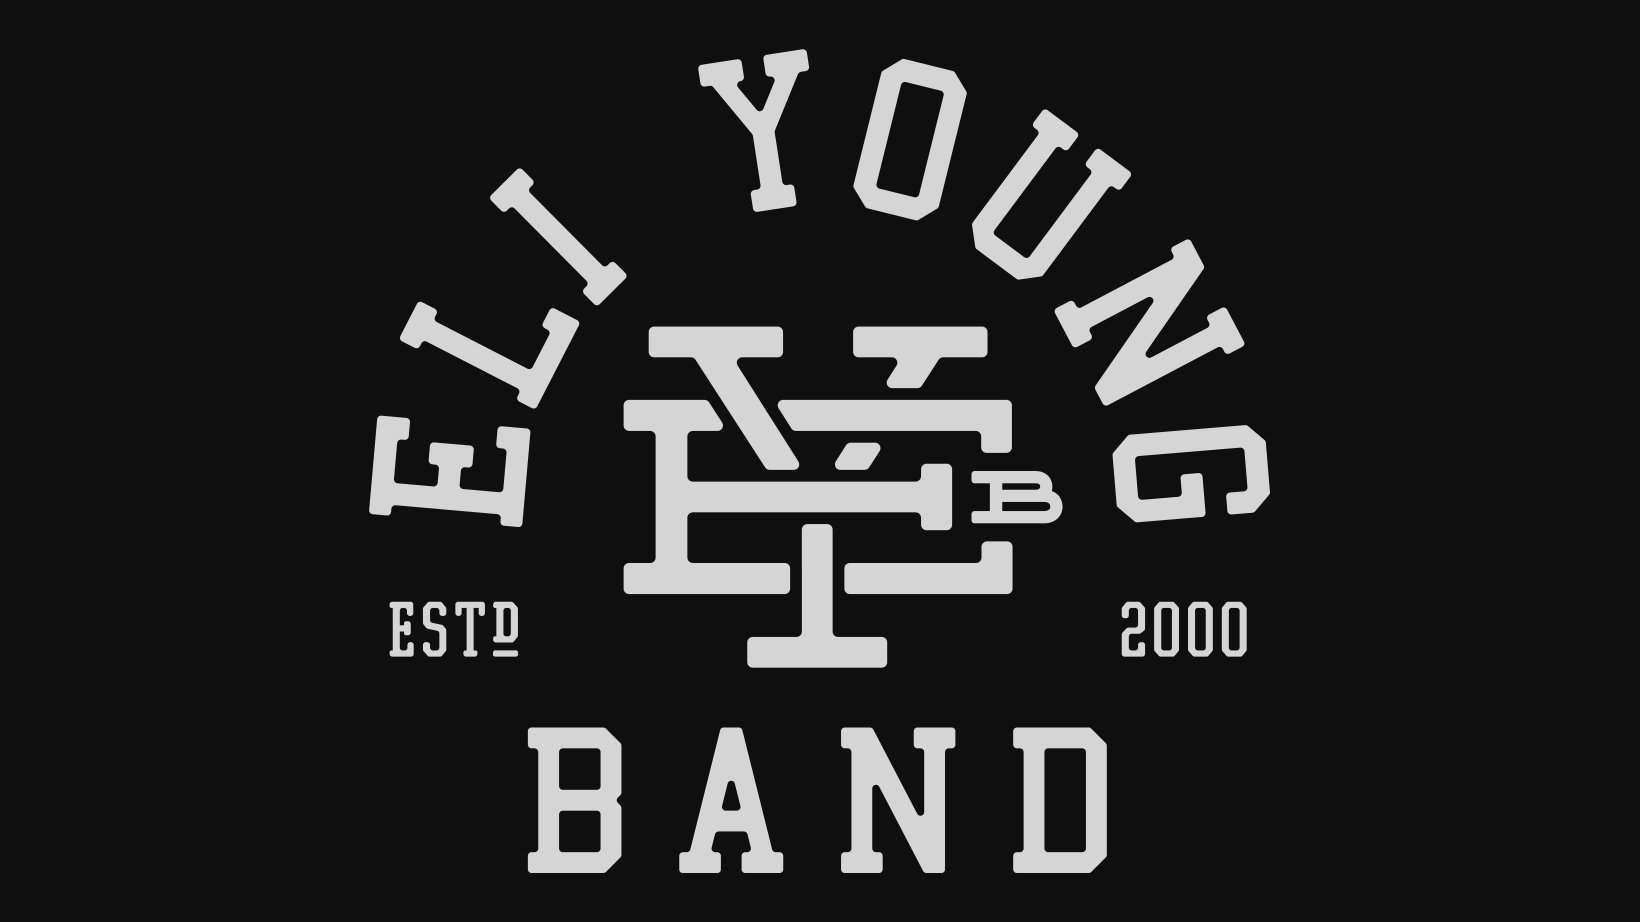 Eli Young Band.jpg